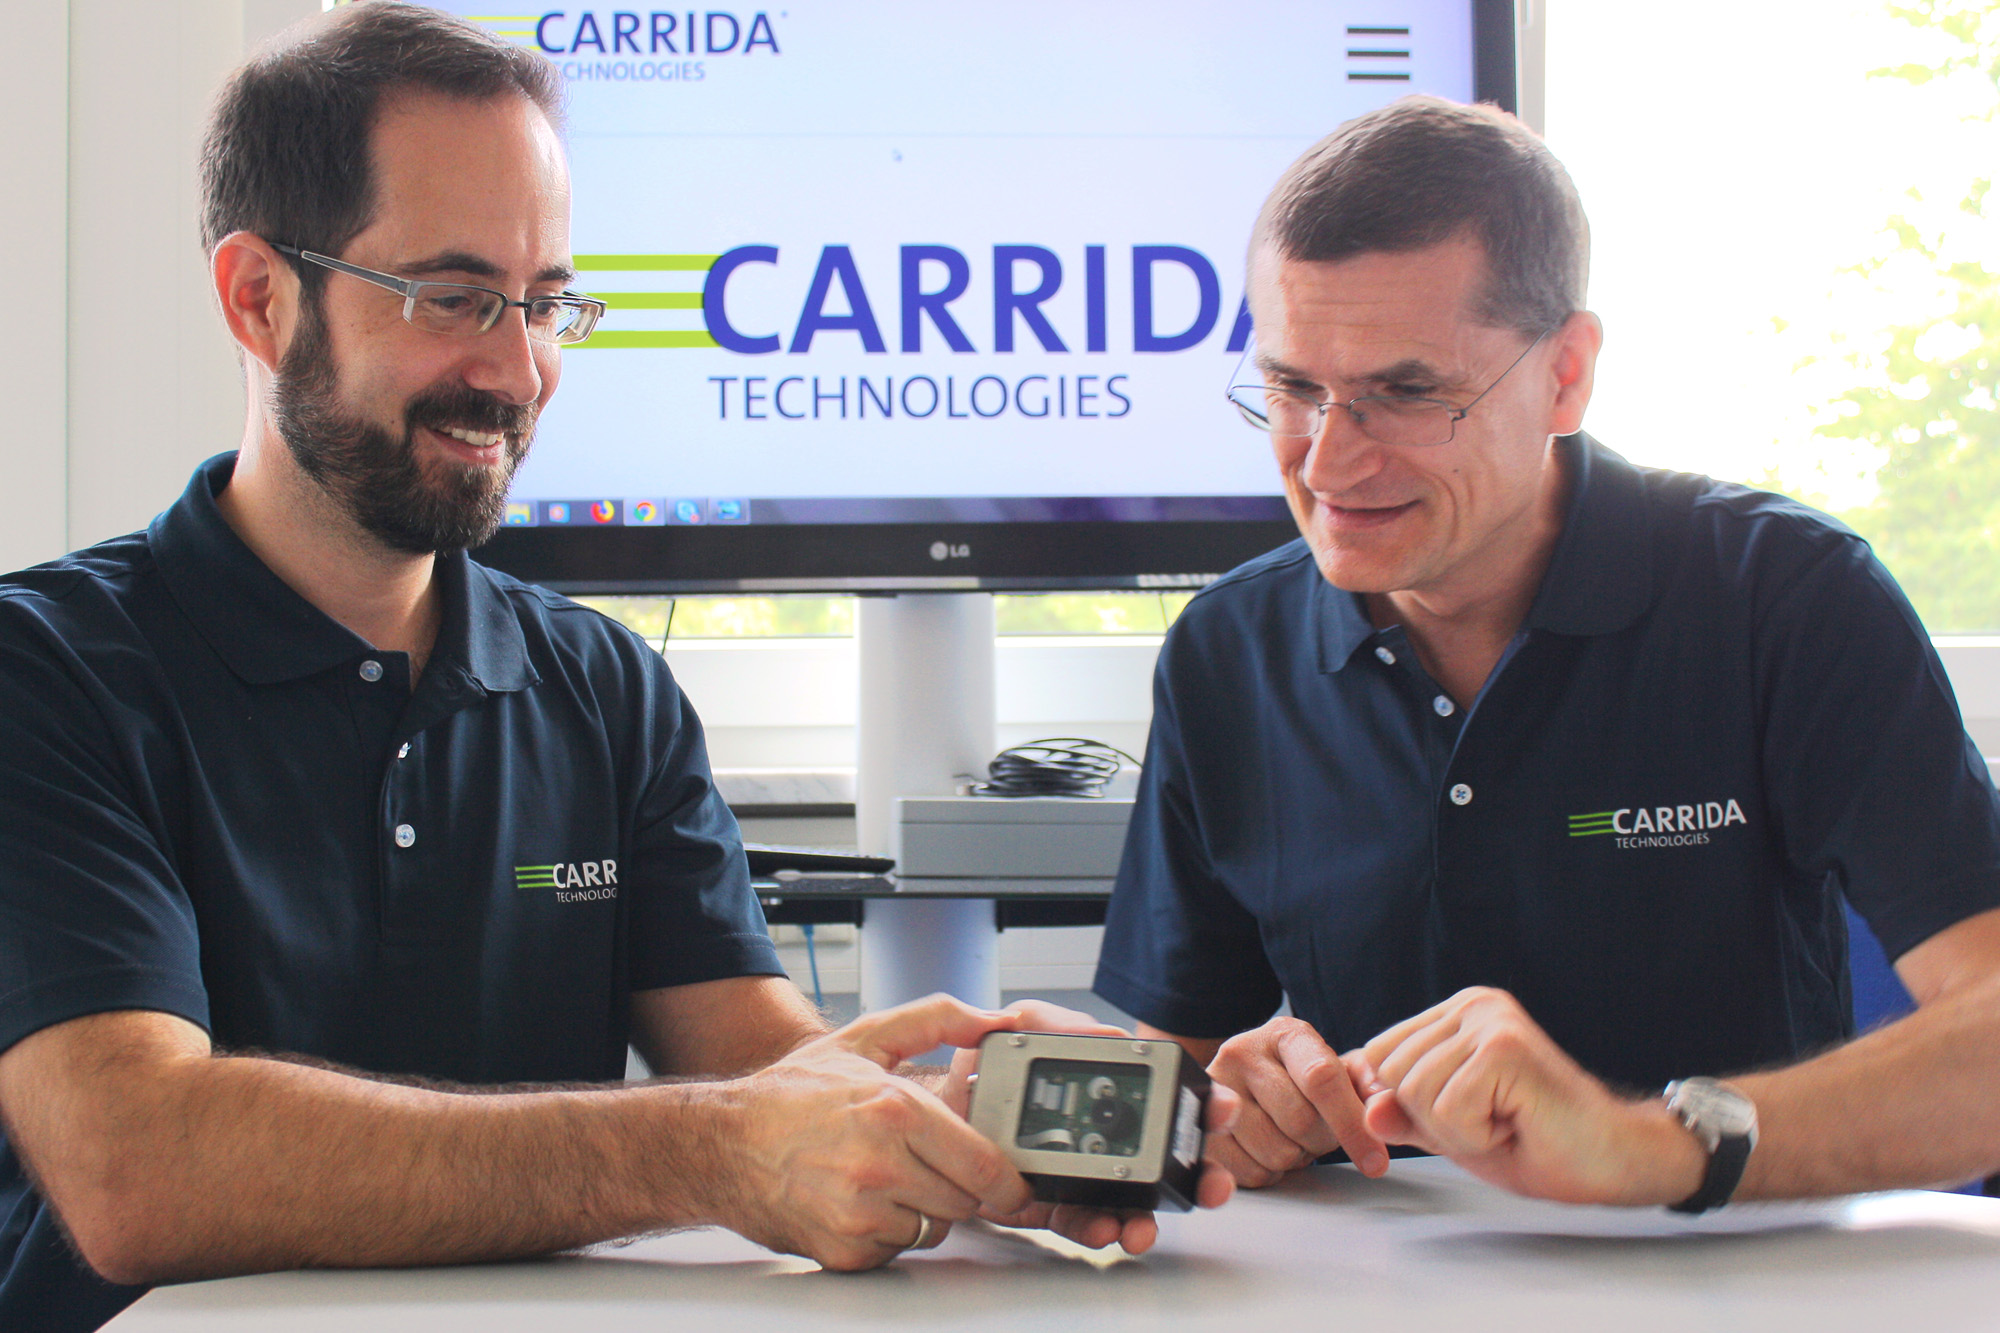 Managing Directors of Carrida Technologies, Jan-Erik Schmitt and Oliver Sidla